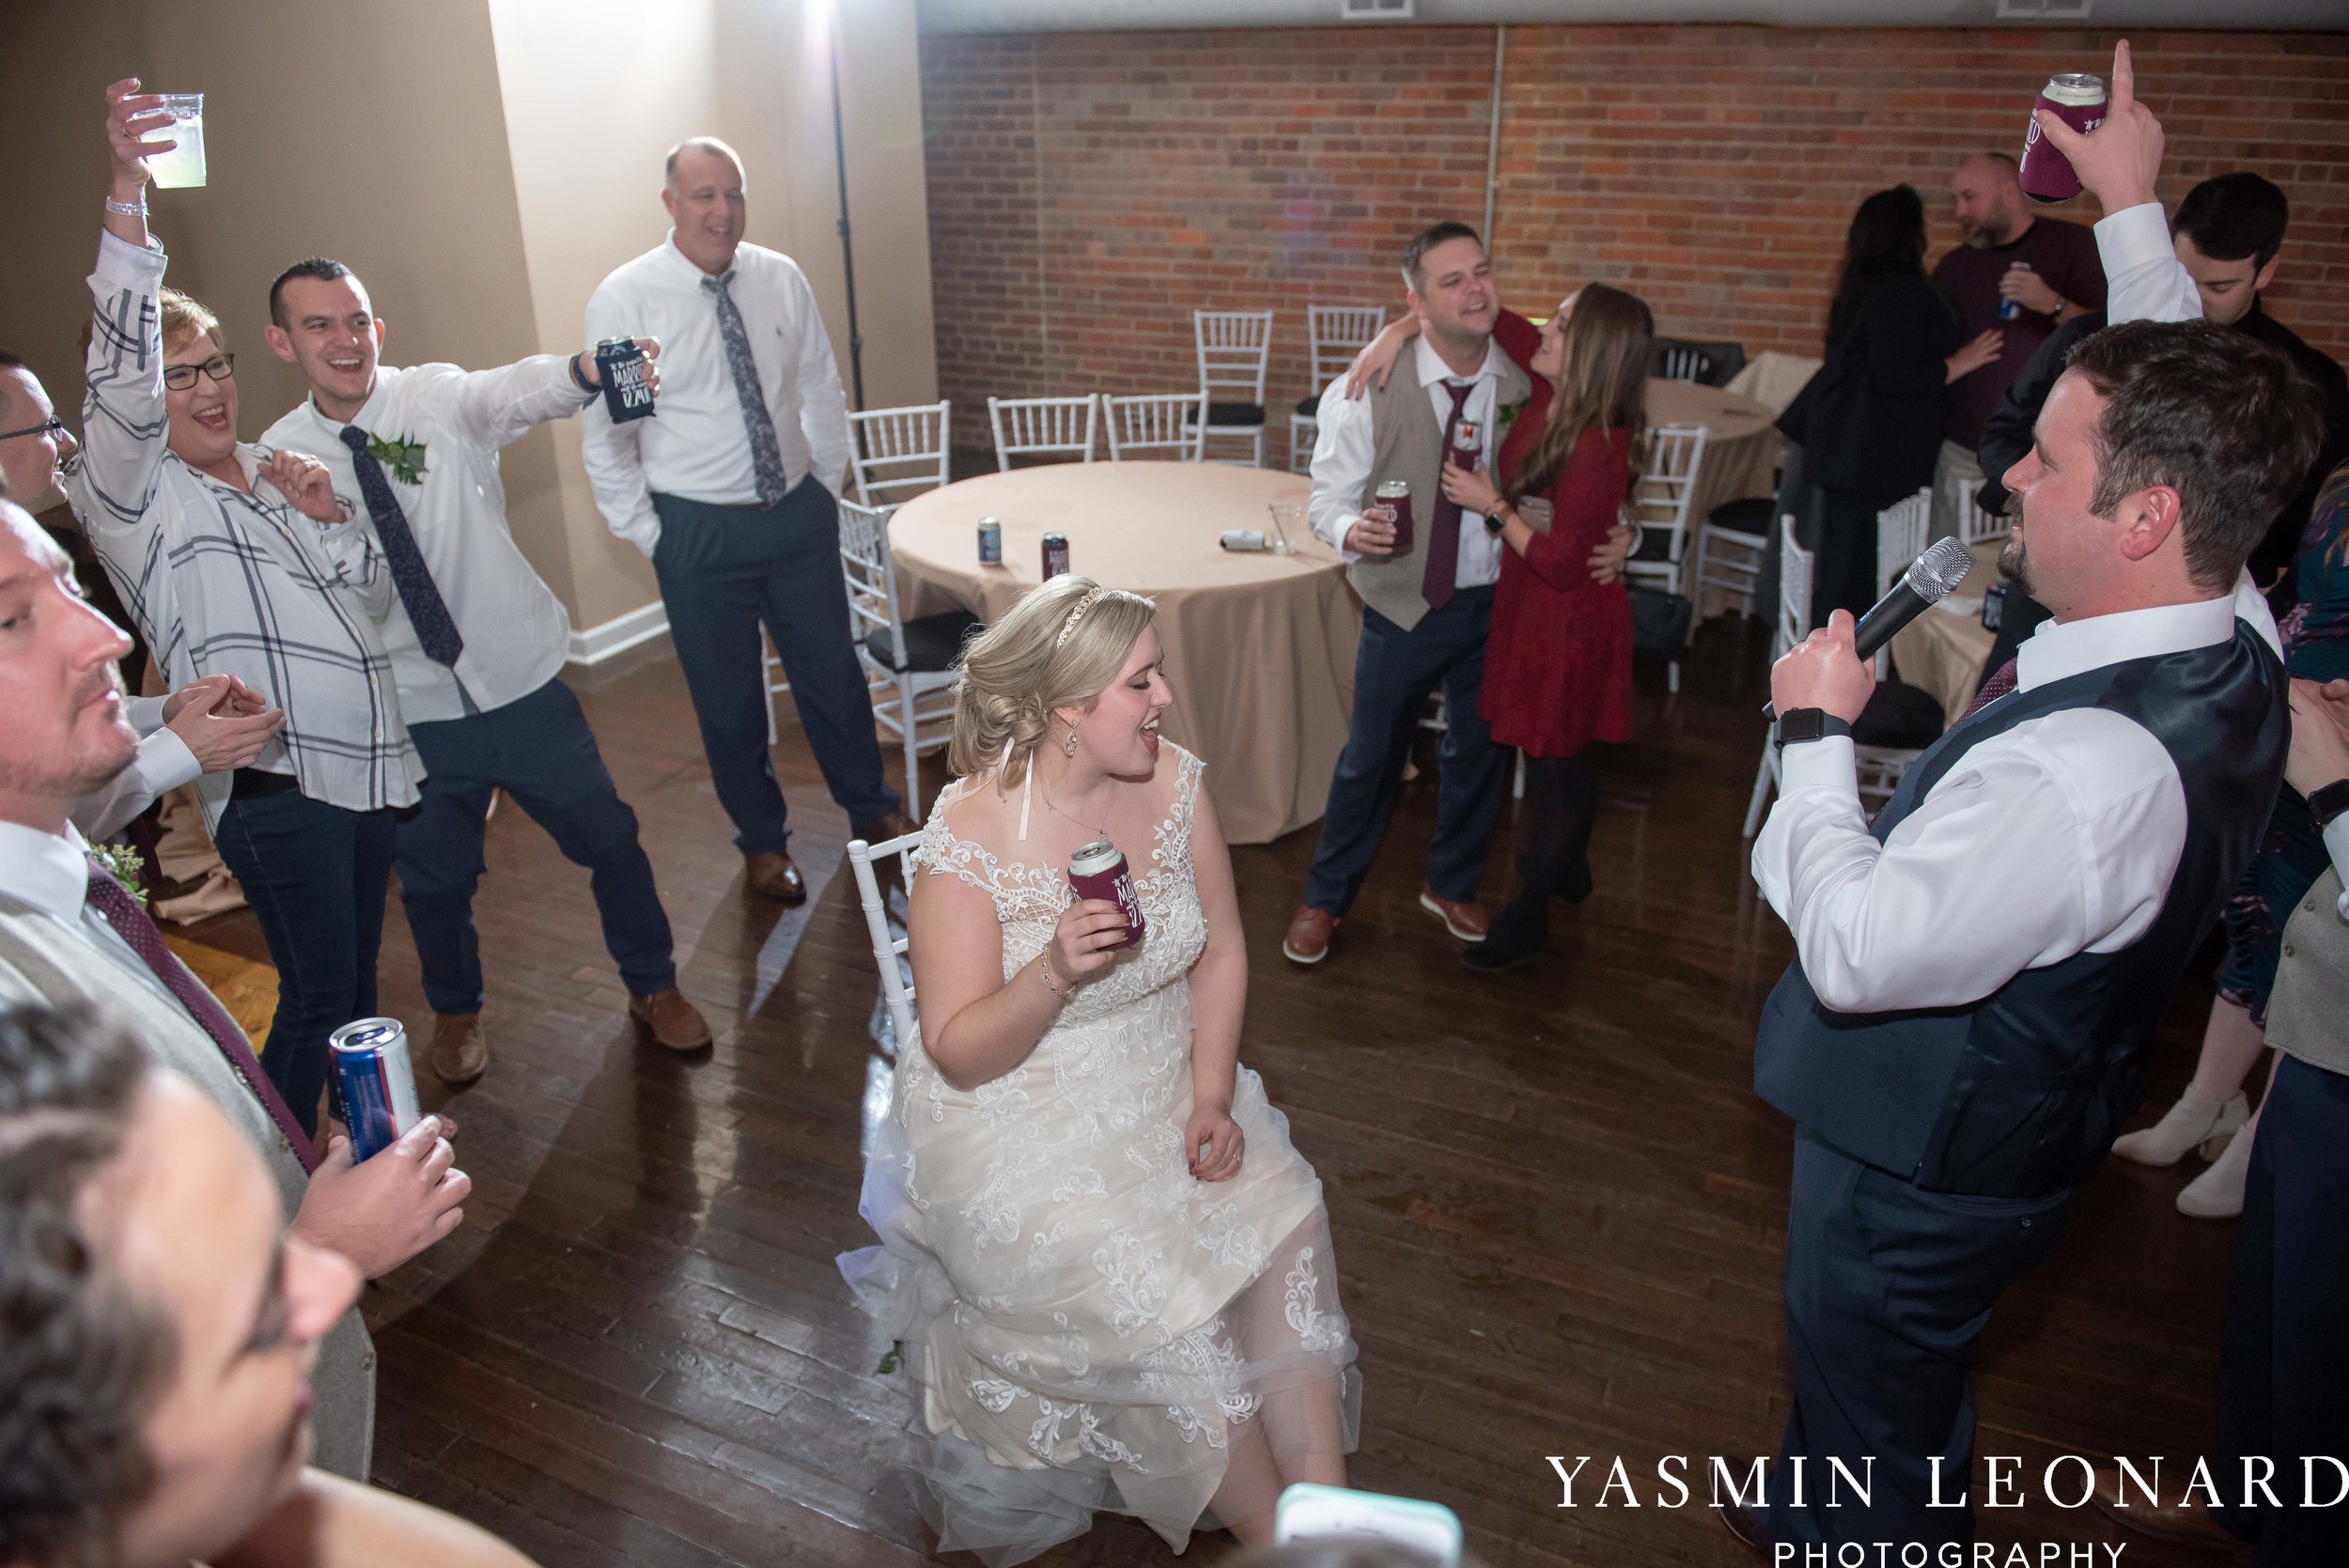 Rebekah and Matt - 105 Worth Event Centre - Yasmin Leonard Photography - Asheboro Wedding - NC Wedding - High Point Weddings - Triad Weddings - Winter Wedding-87.jpg